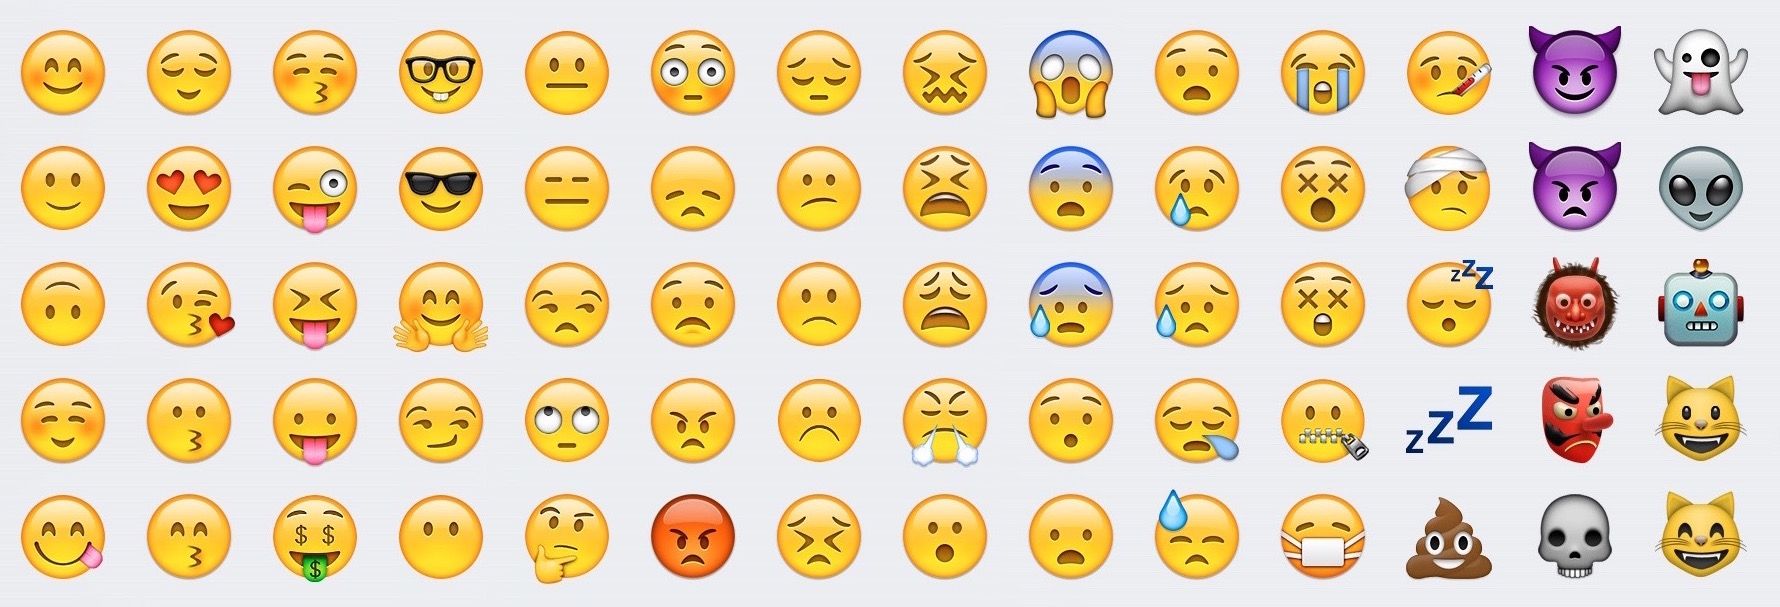 iOS 9.1 includes new emojis